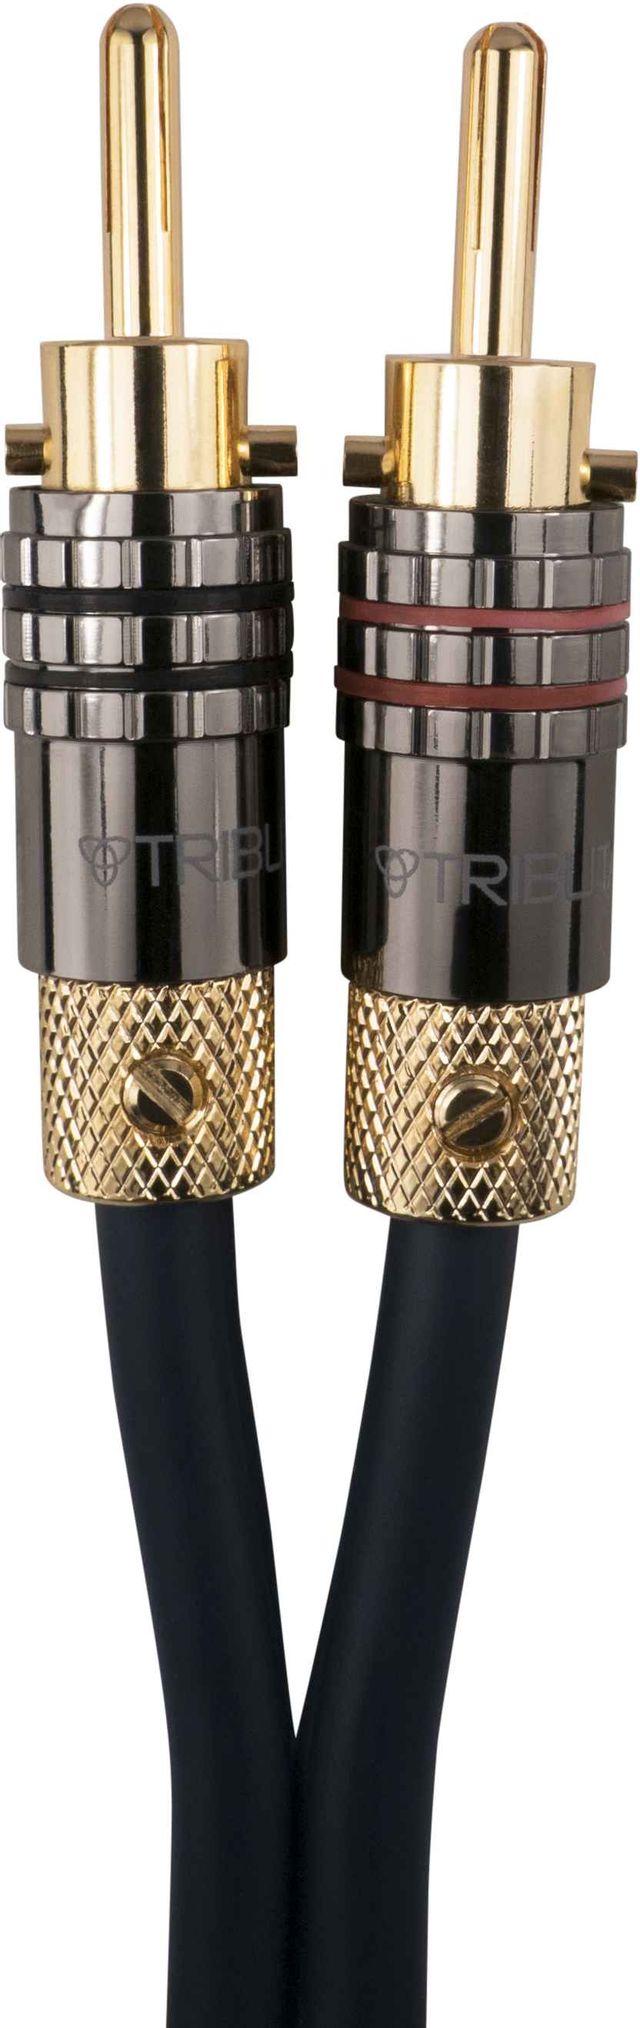 Tributaries® Series 8 8 Ft. Banana Plugs Speaker Cable 0